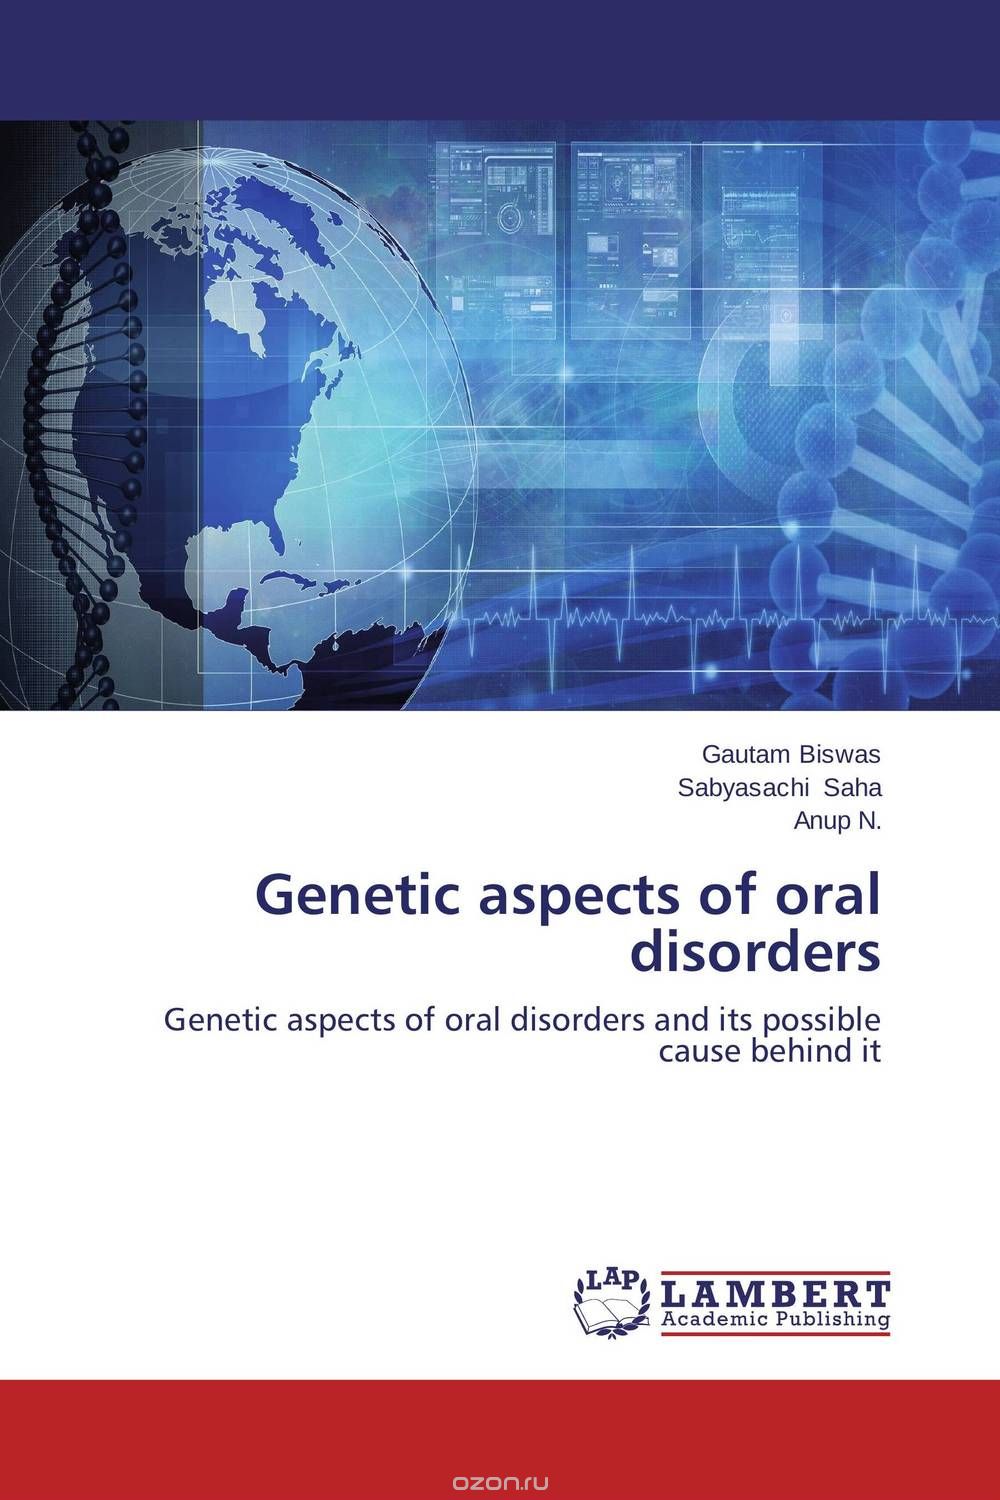 Скачать книгу "Genetic aspects of oral disorders"